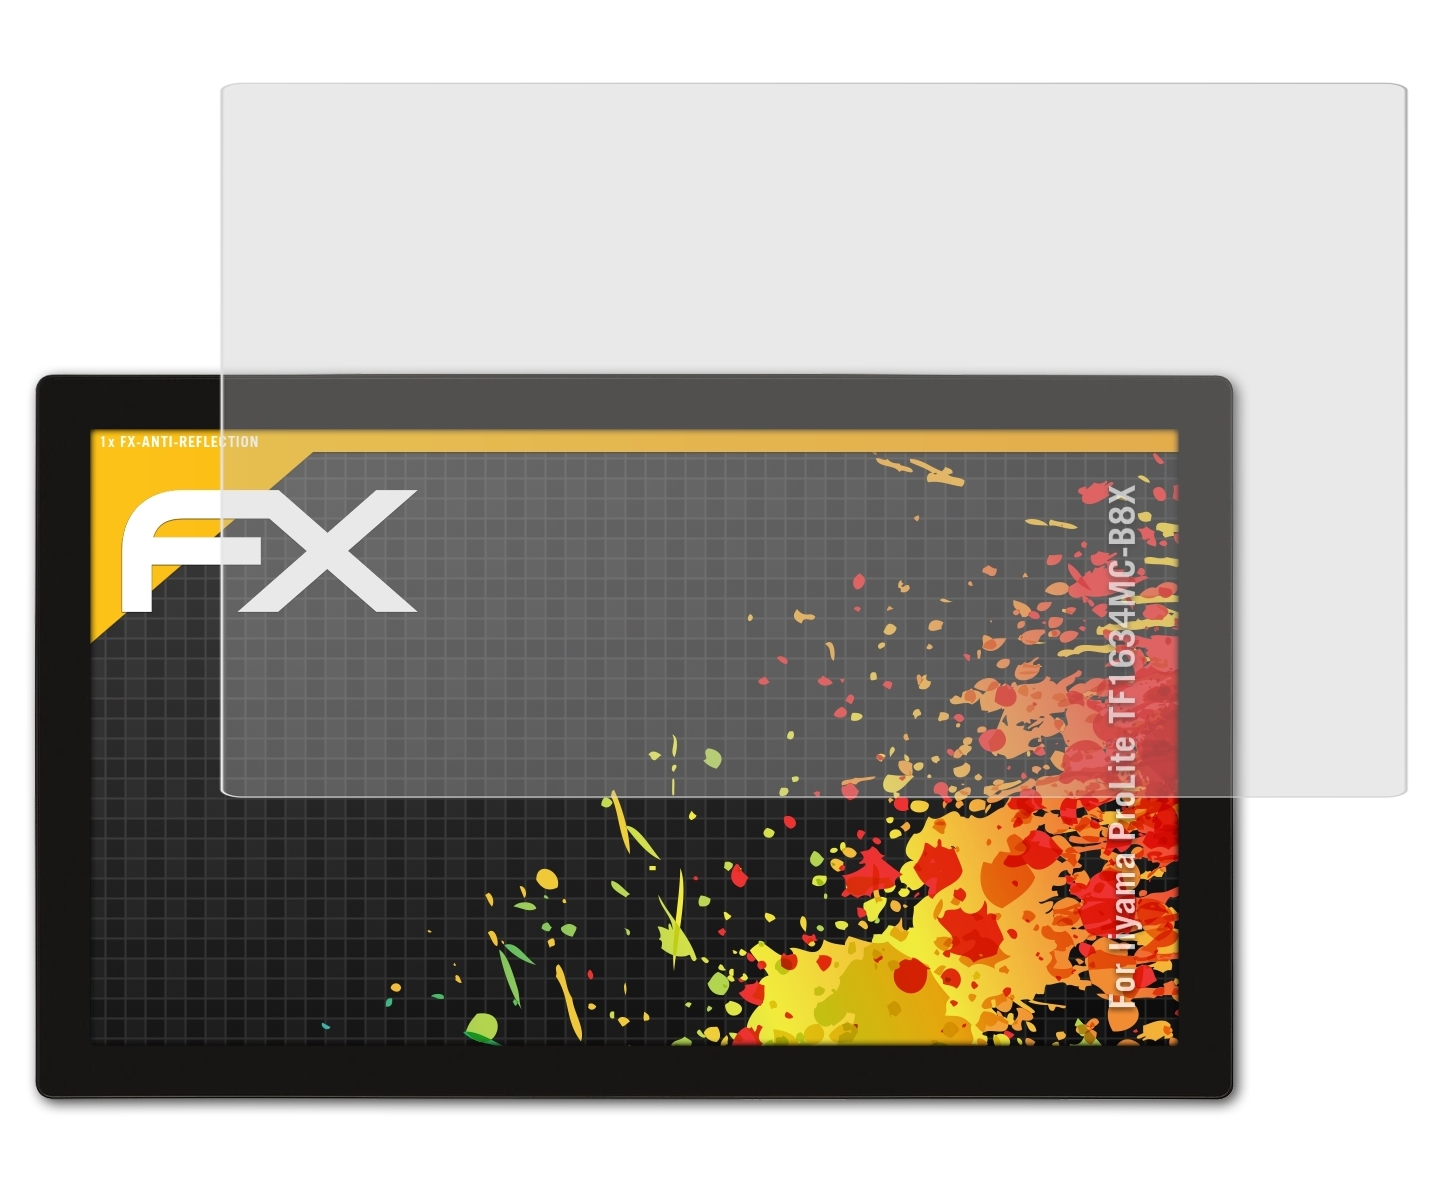 ATFOLIX FX-Antireflex Displayschutz(für TF1634MC-B8X) Iiyama ProLite